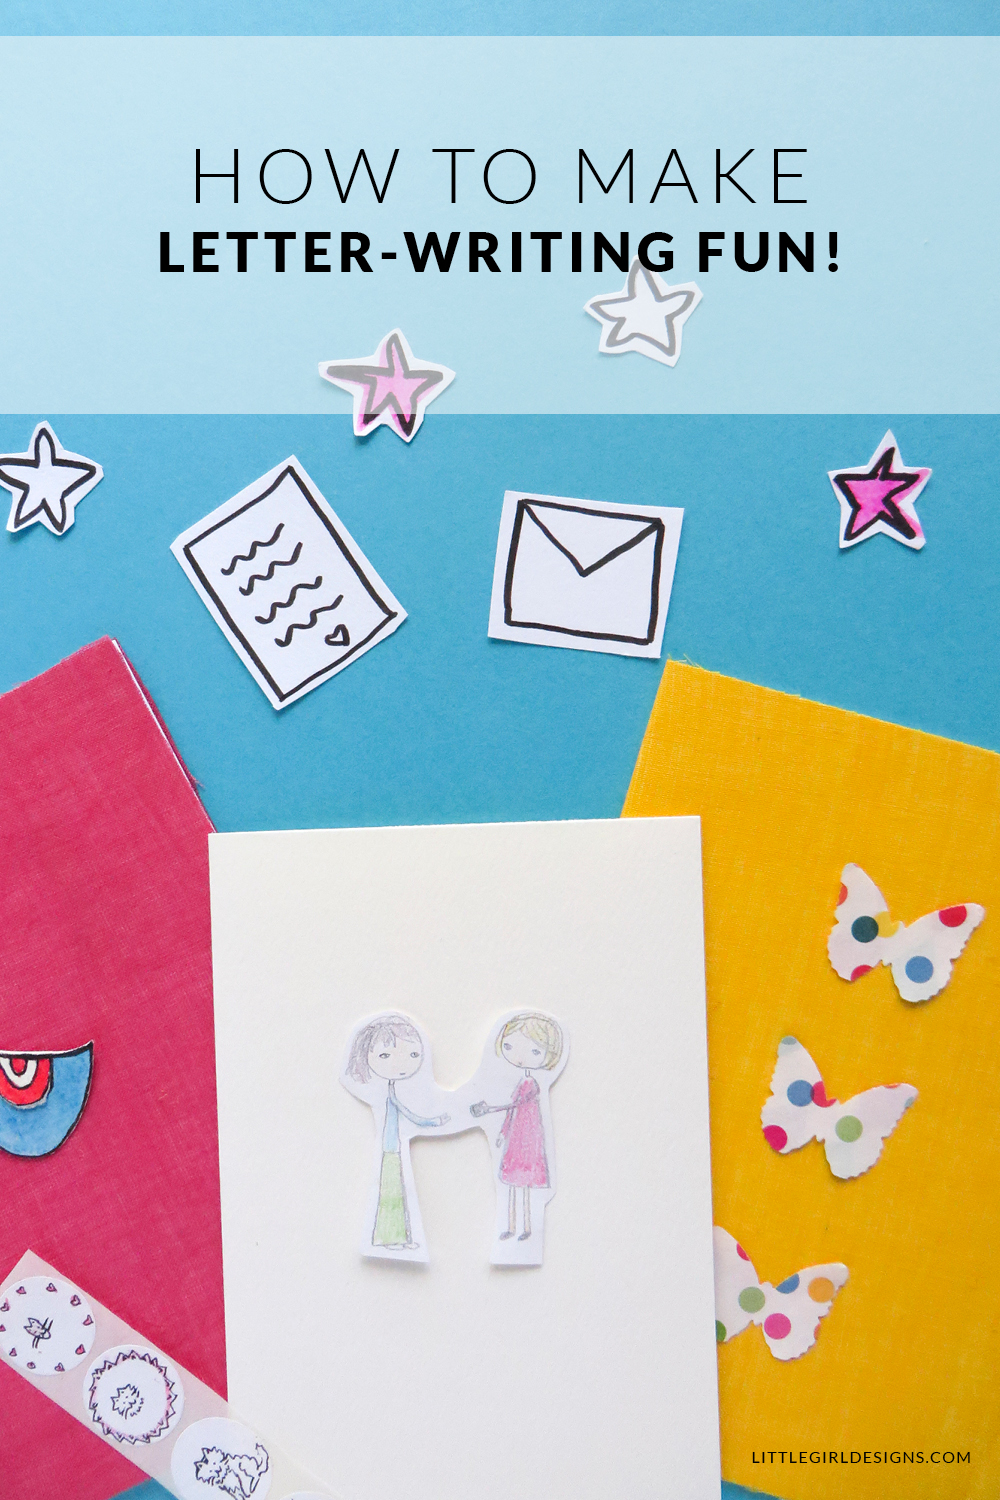 How to Make Letter-writing Fun - Learn some tips on how to make letter-writing fun + a couple super easy tutorials! @ littlegirldesigns.com